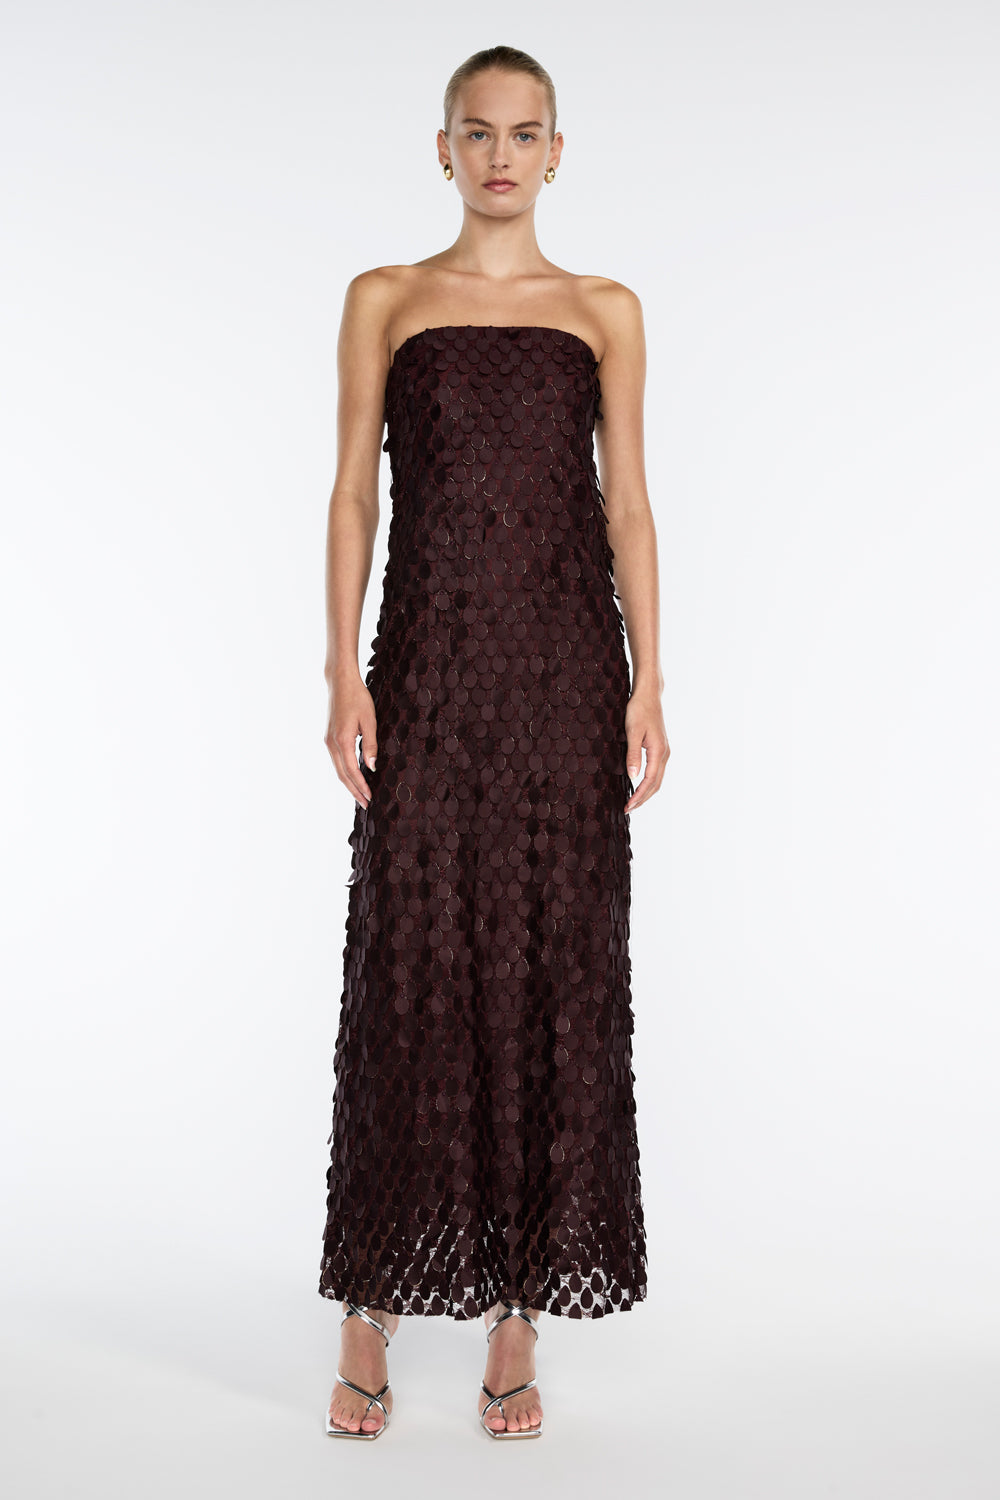 Pop Sensation Knit Dress by Manning Cartell for $40